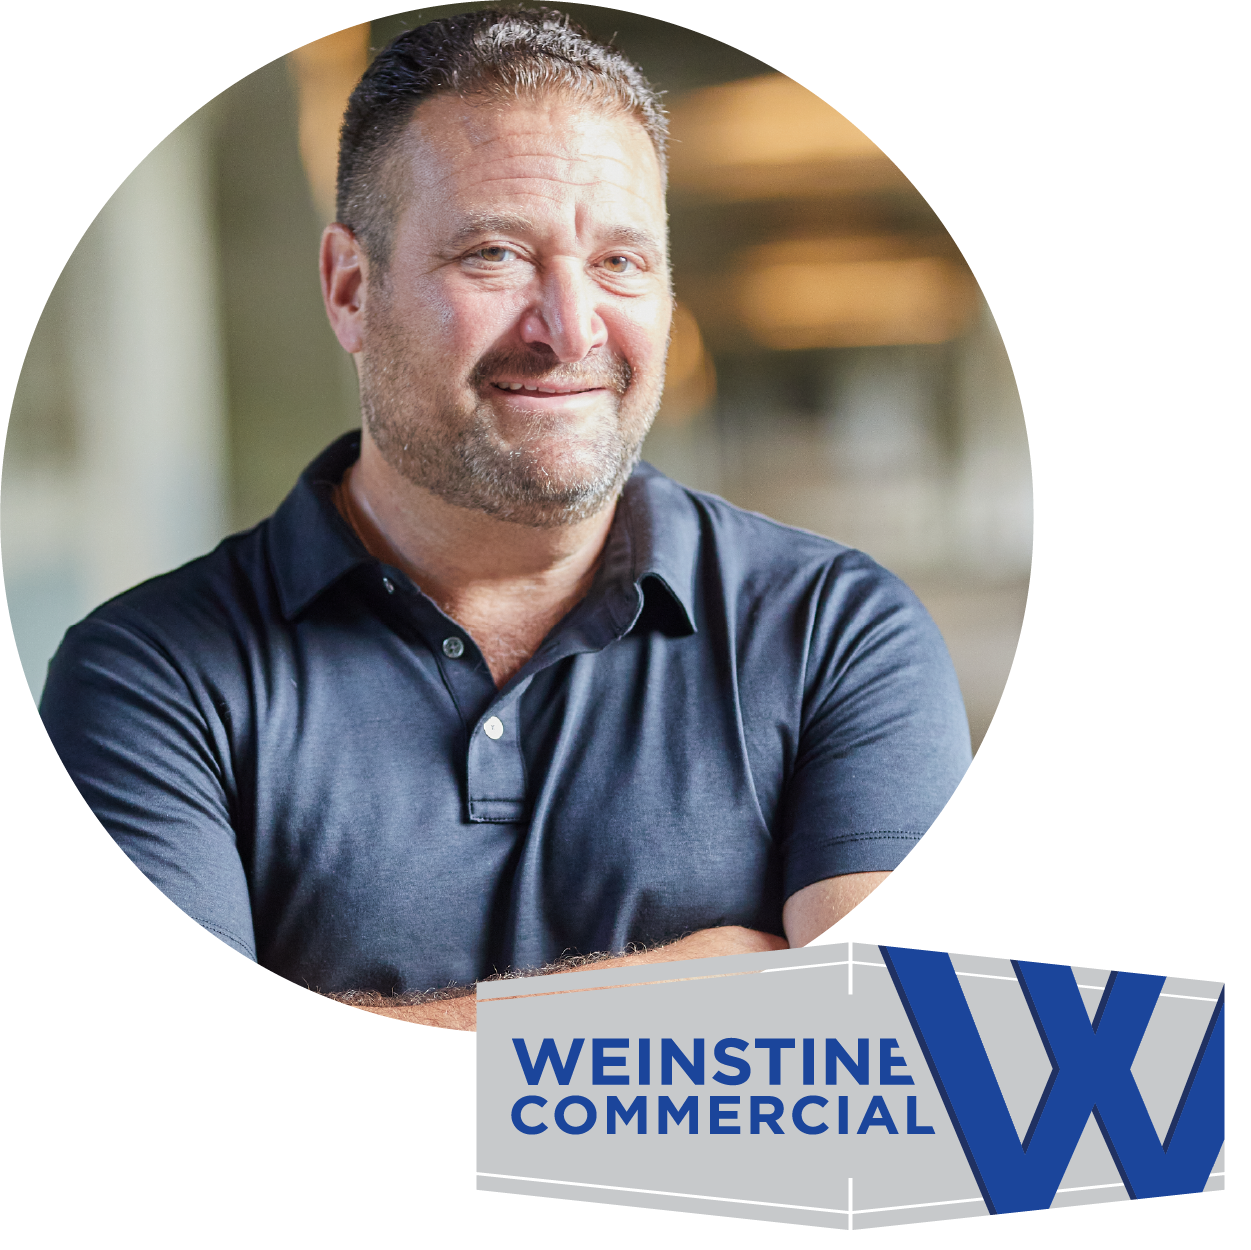 Tony Weinstine - Commercial Expert